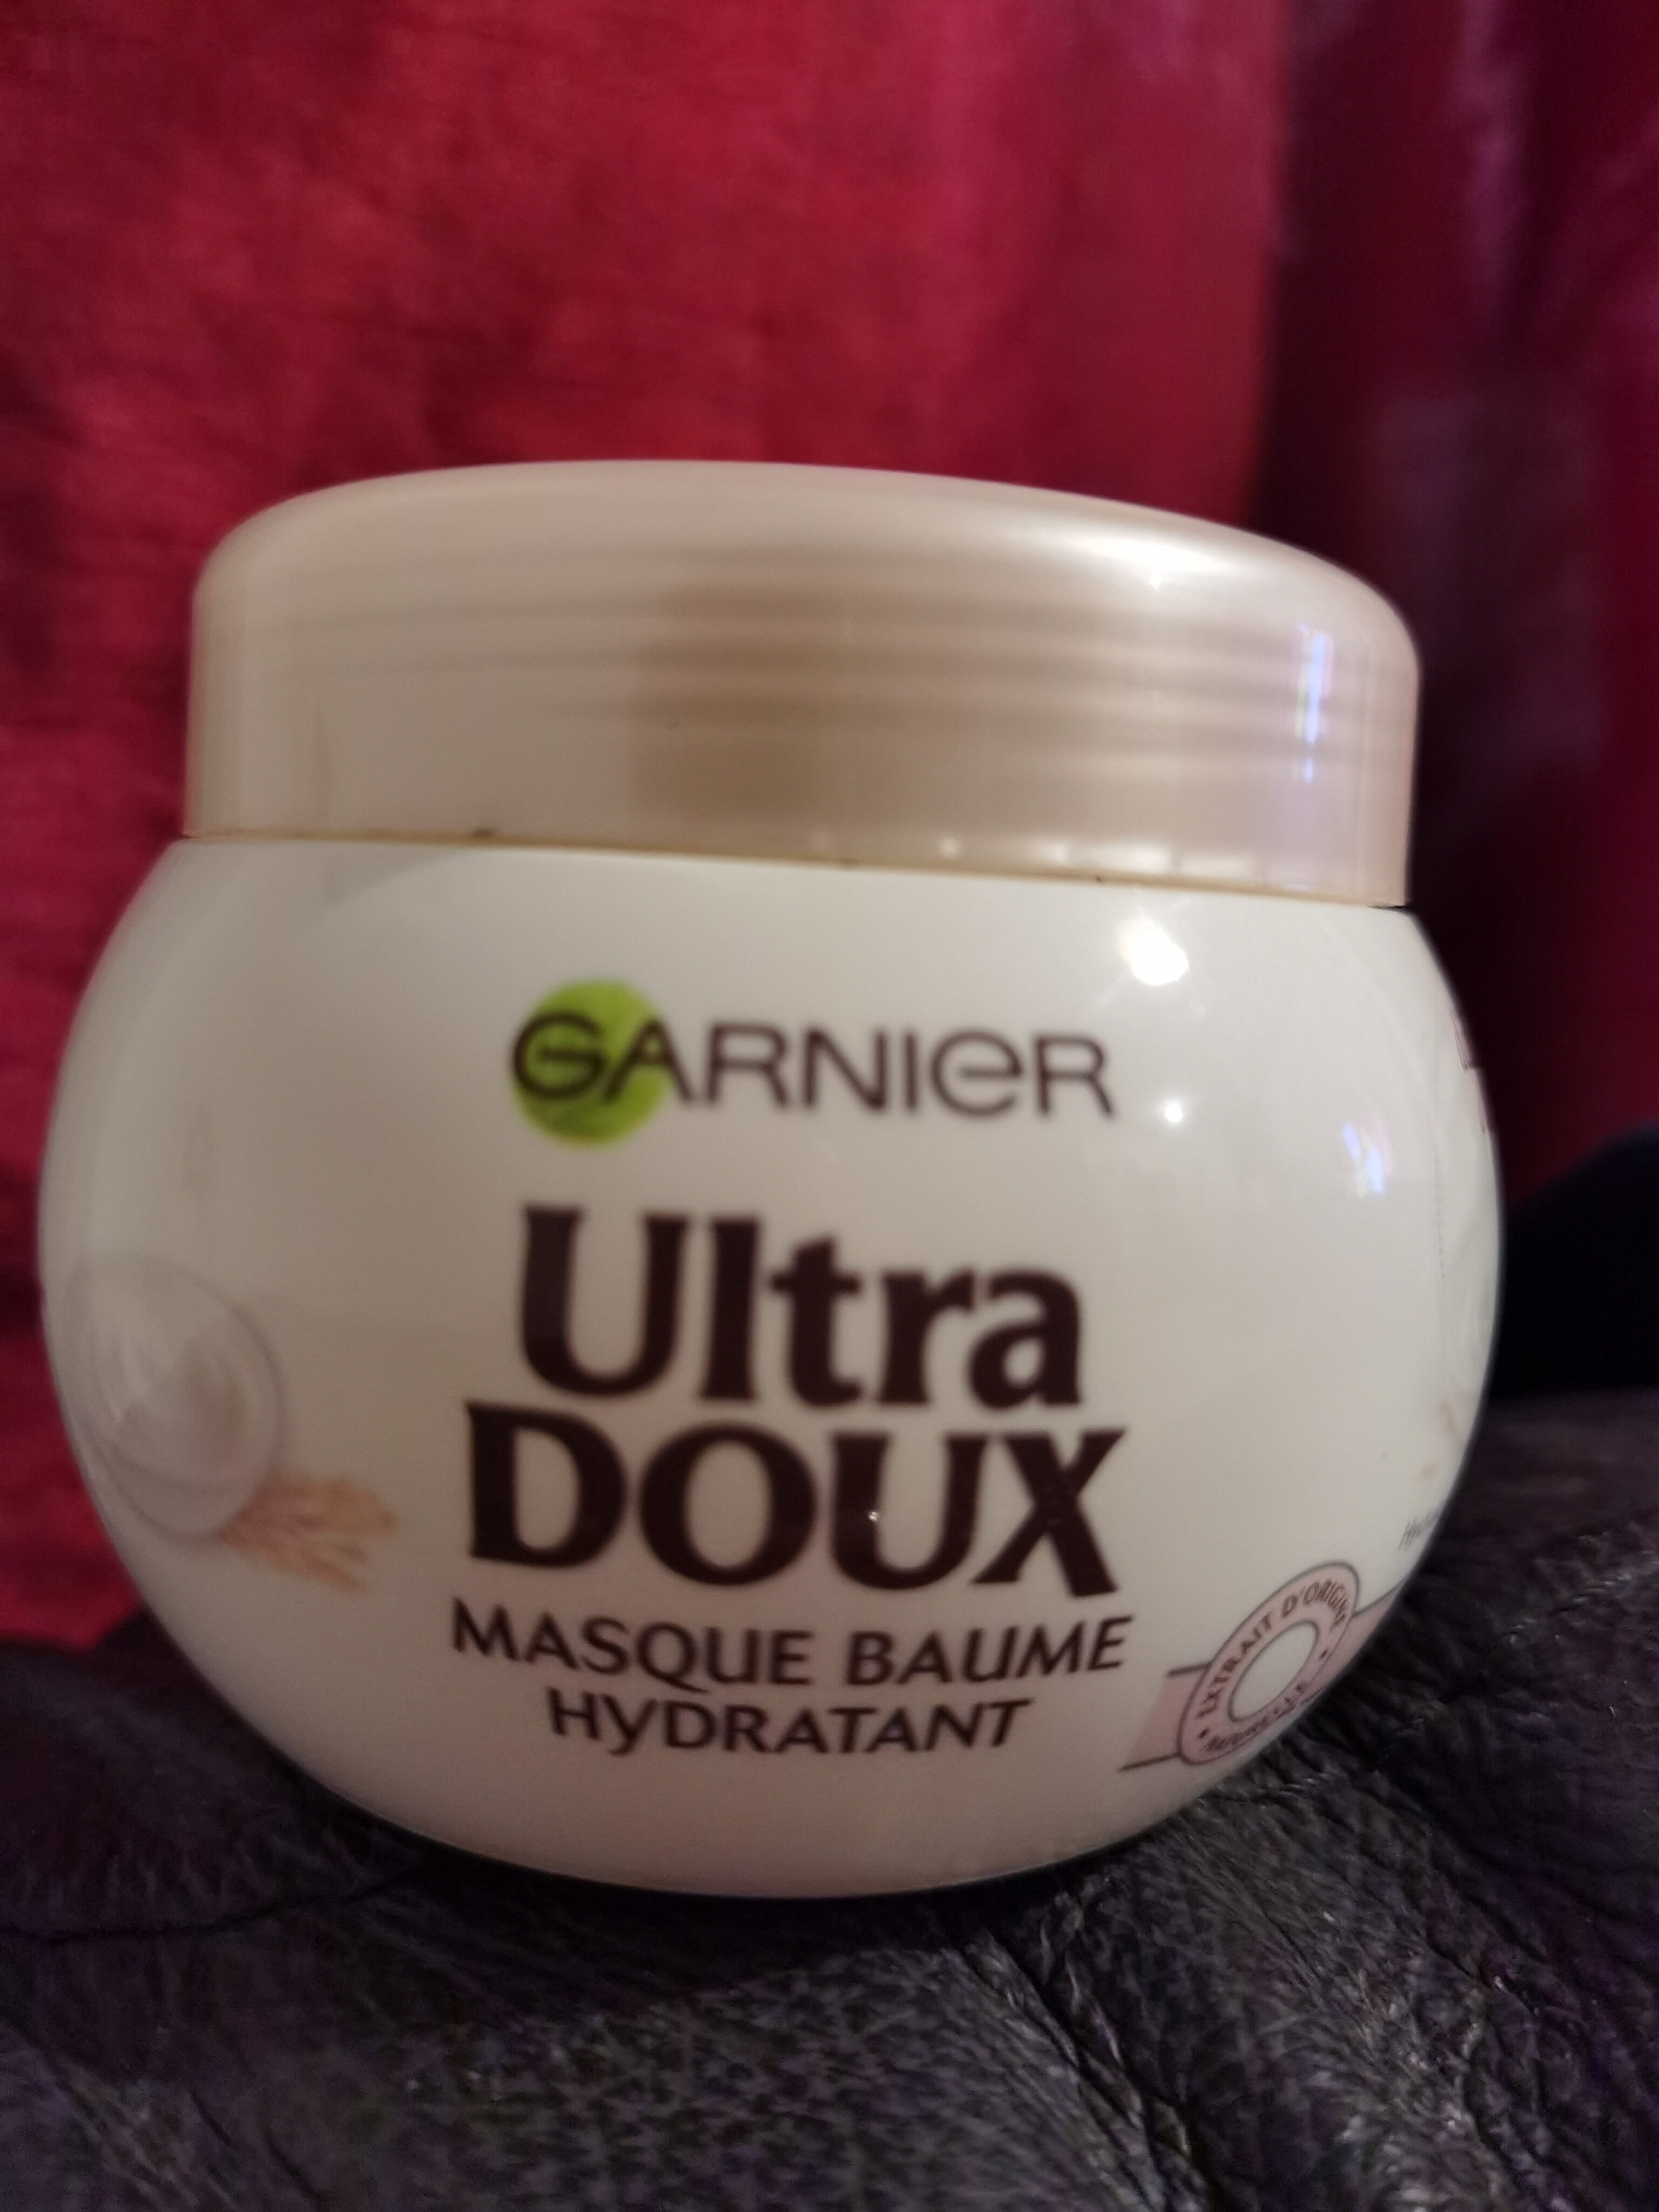 Ultra doux masque baume hydratant - 製品 - fr